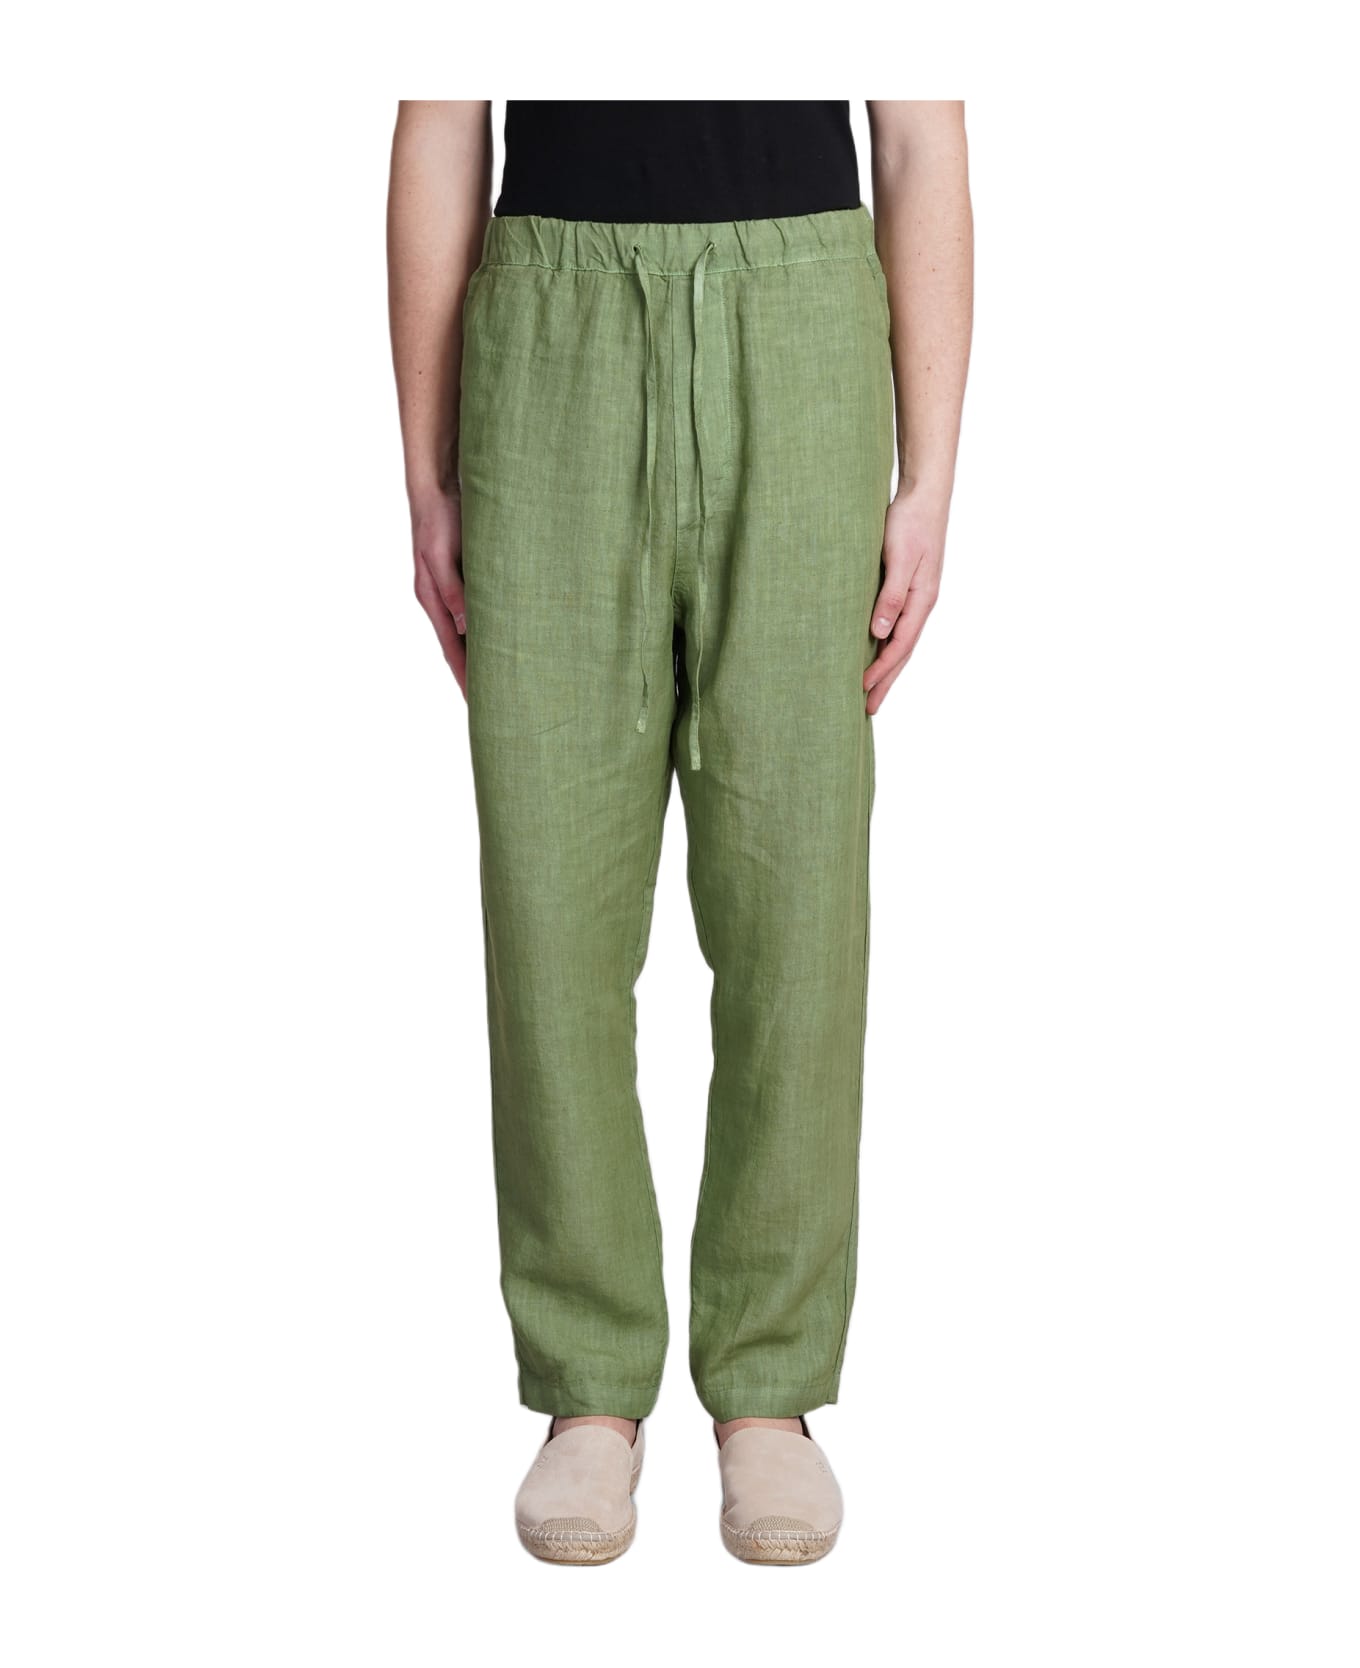 120% Lino Pants In Green Linen - green ボトムス